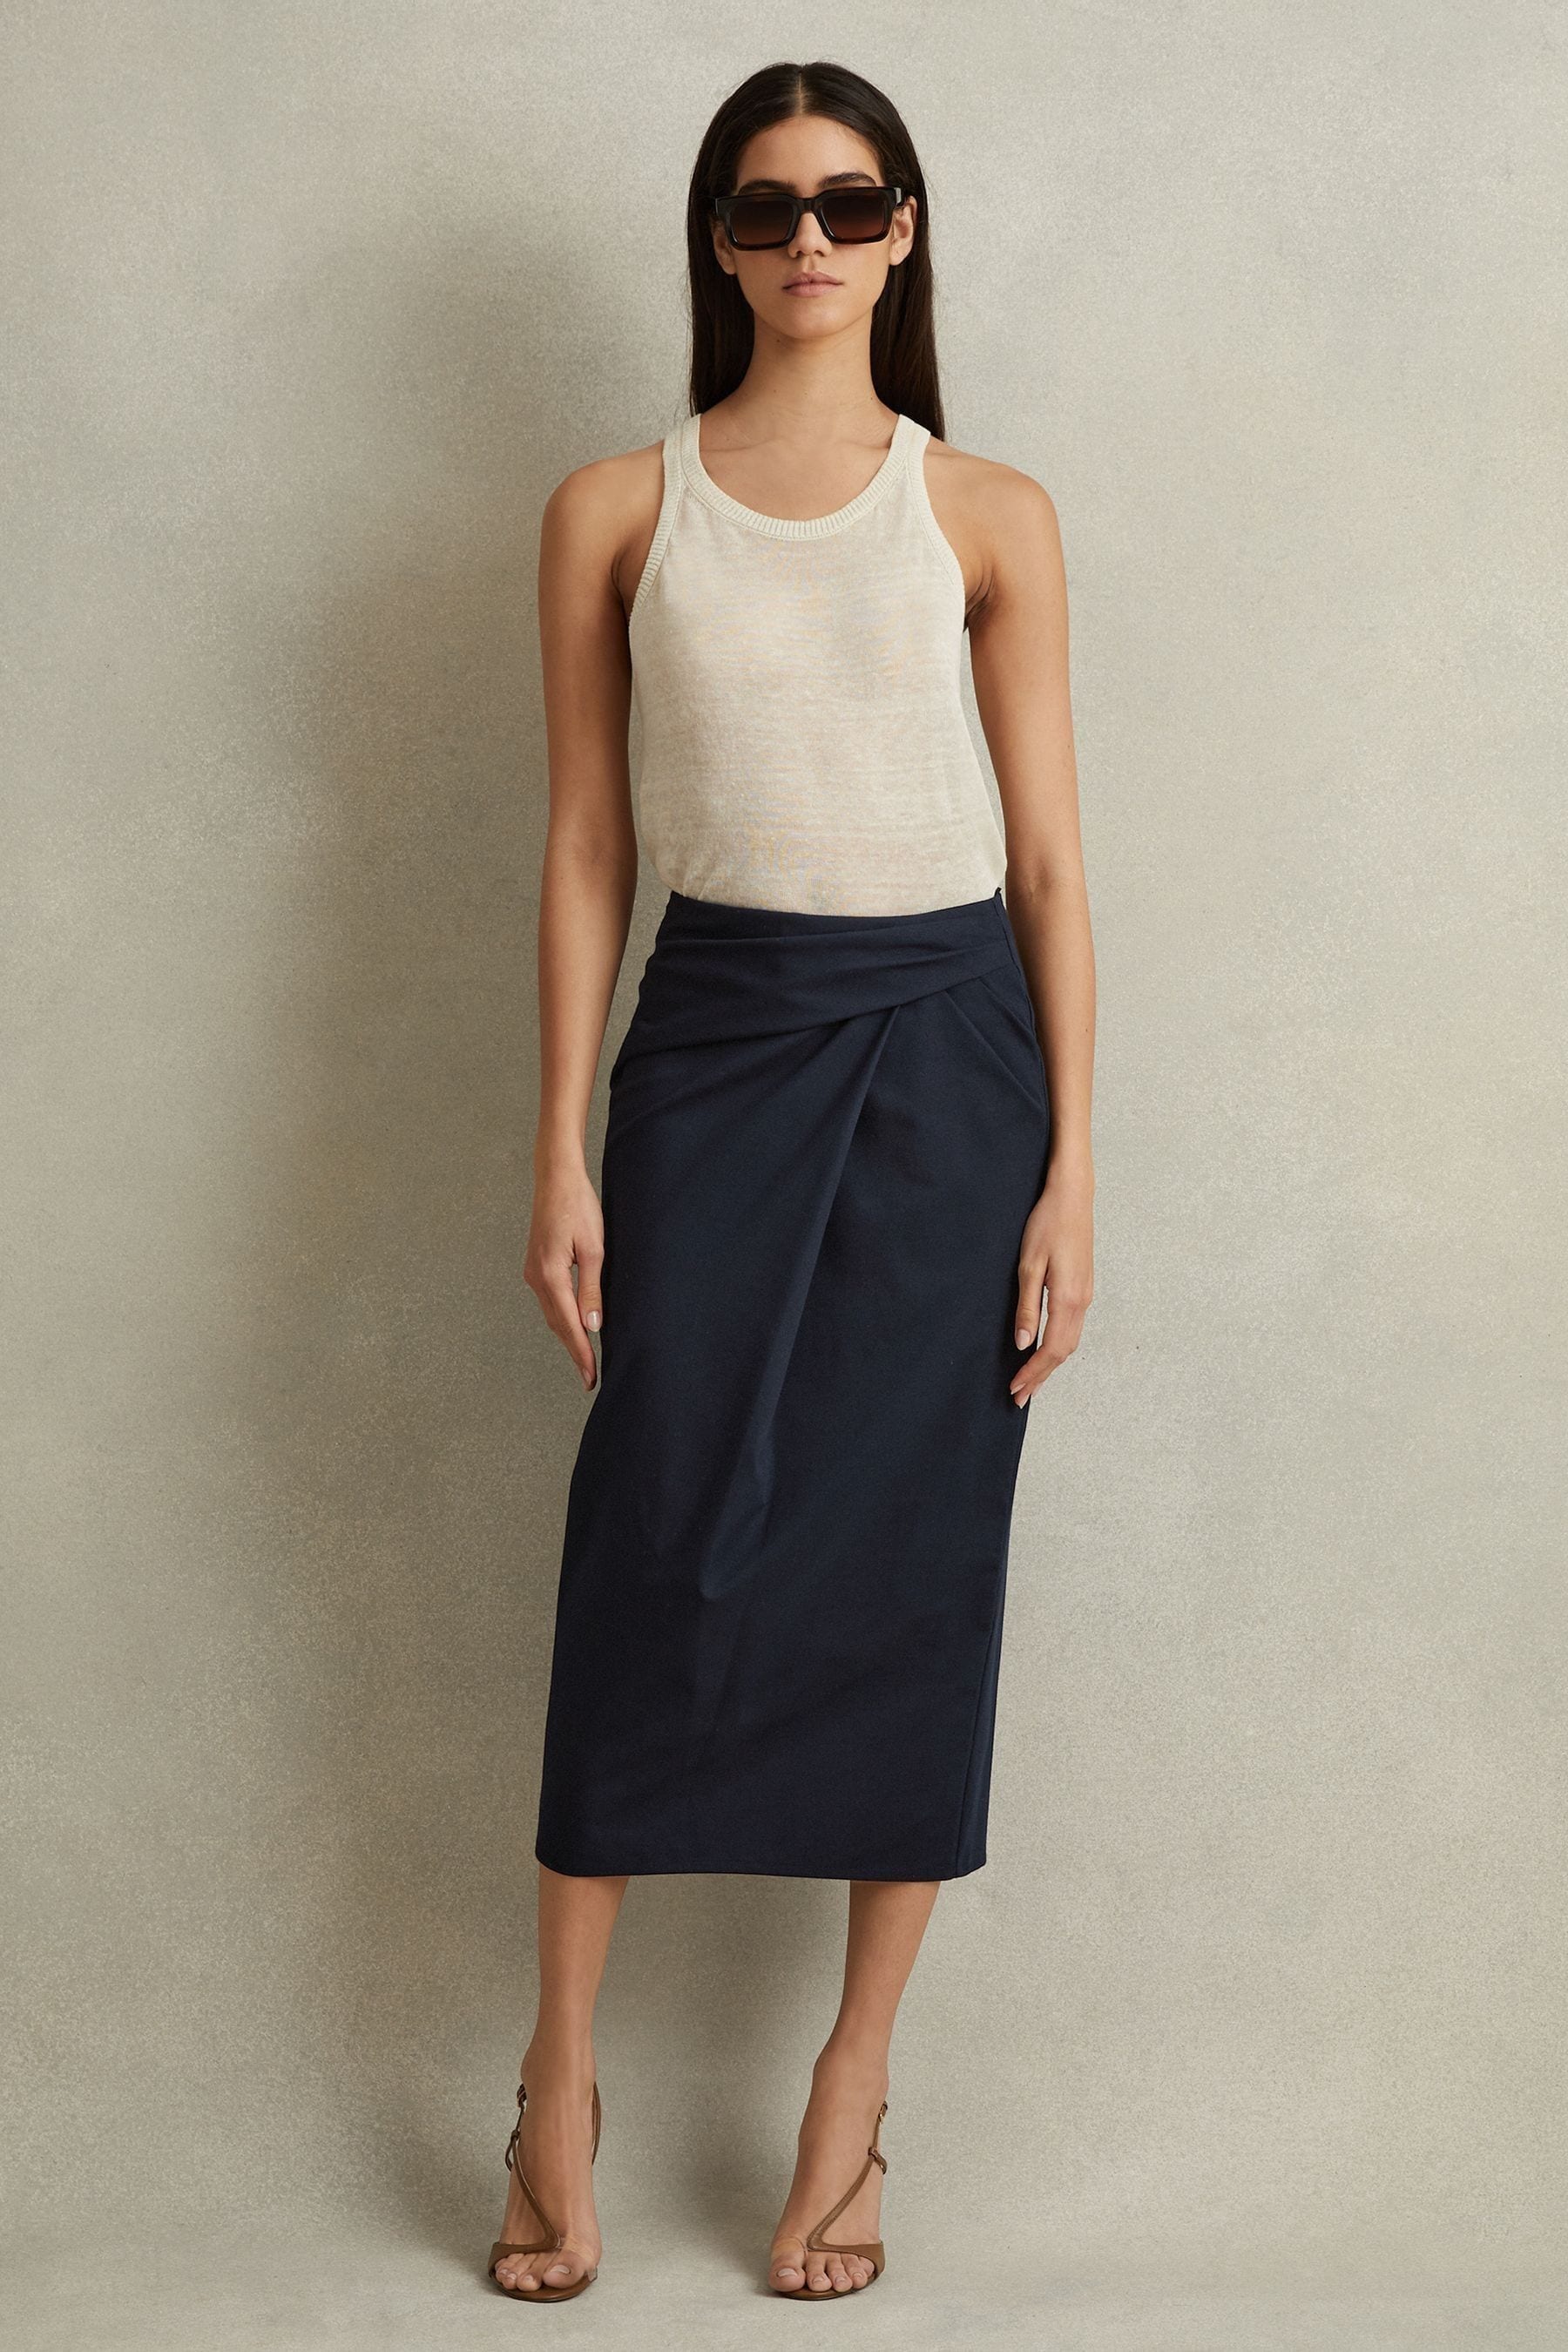 Reiss Nadia - Navy Cotton Blend Wrap Front Midi Skirt, Us 8